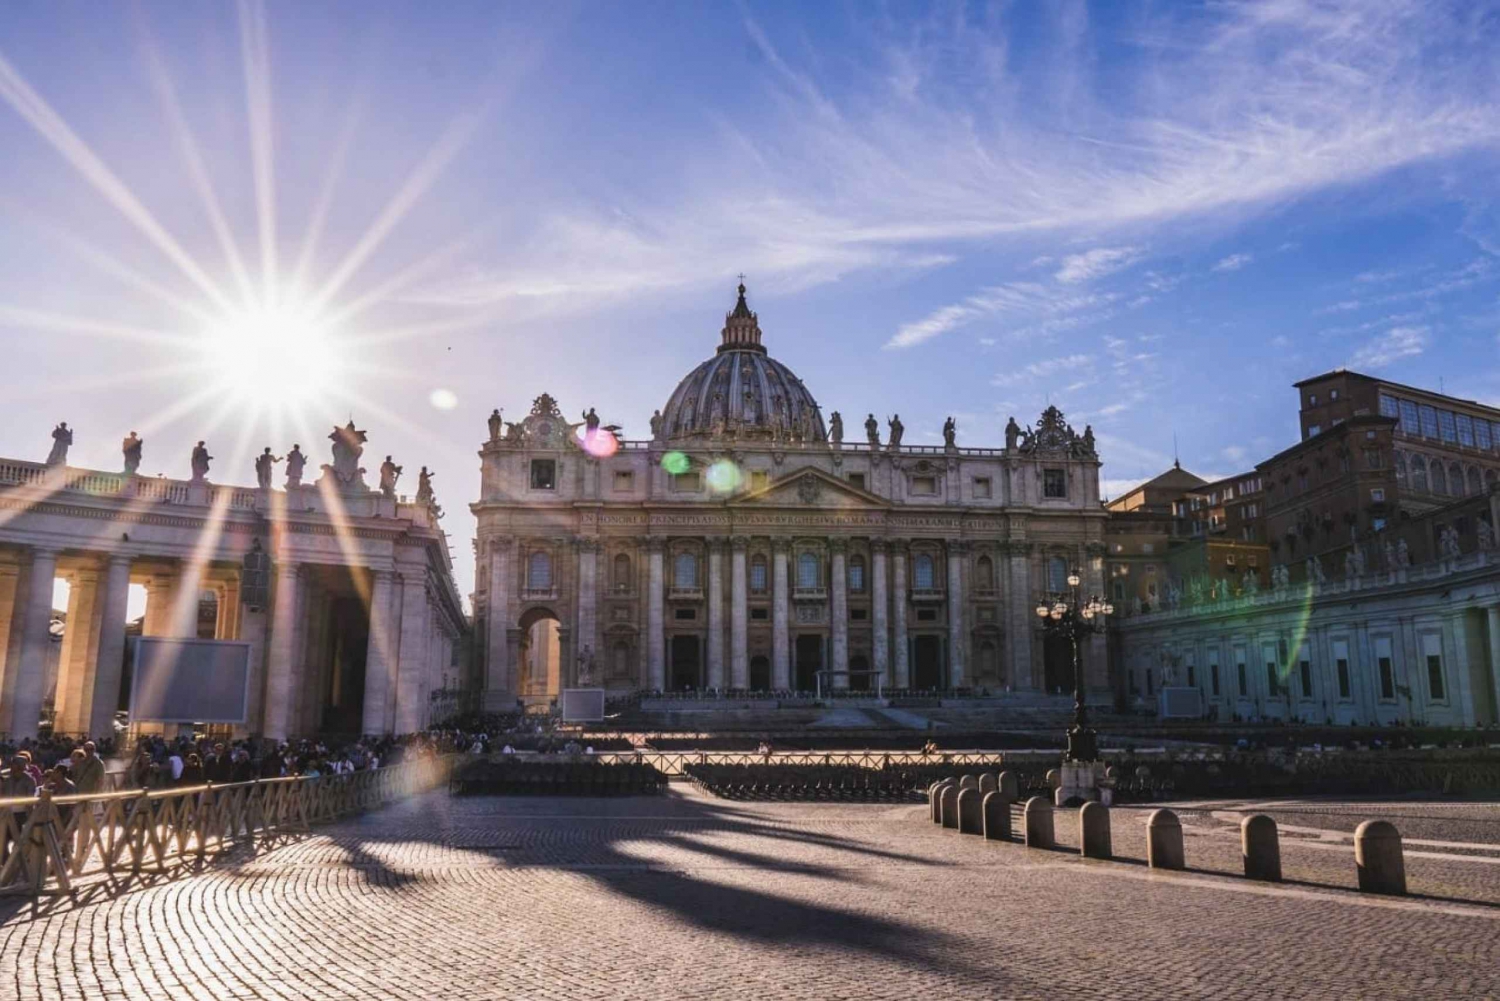 Vatican: St. Peter's Basilica & Vatican Museums Guided Tour